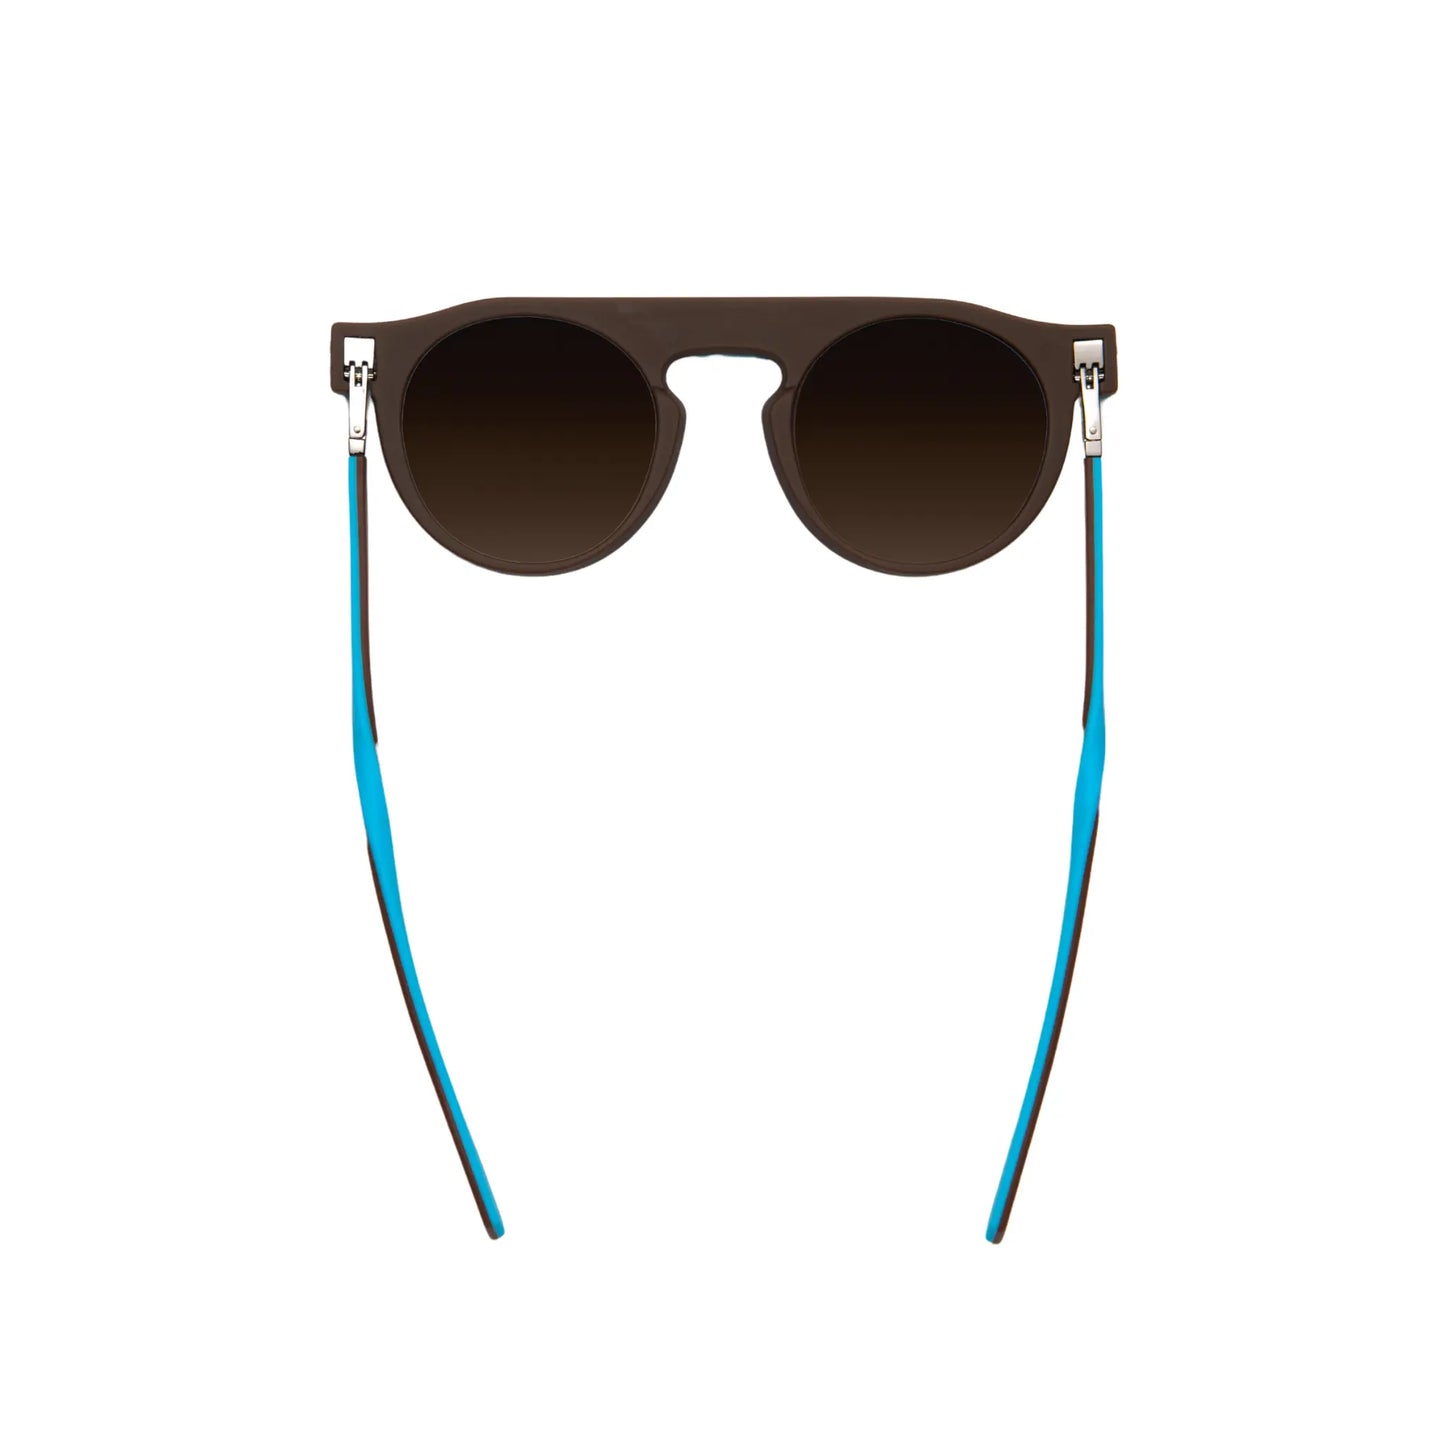 Reverso sunglasses mosaic blue & brown reversible & ultra light top view